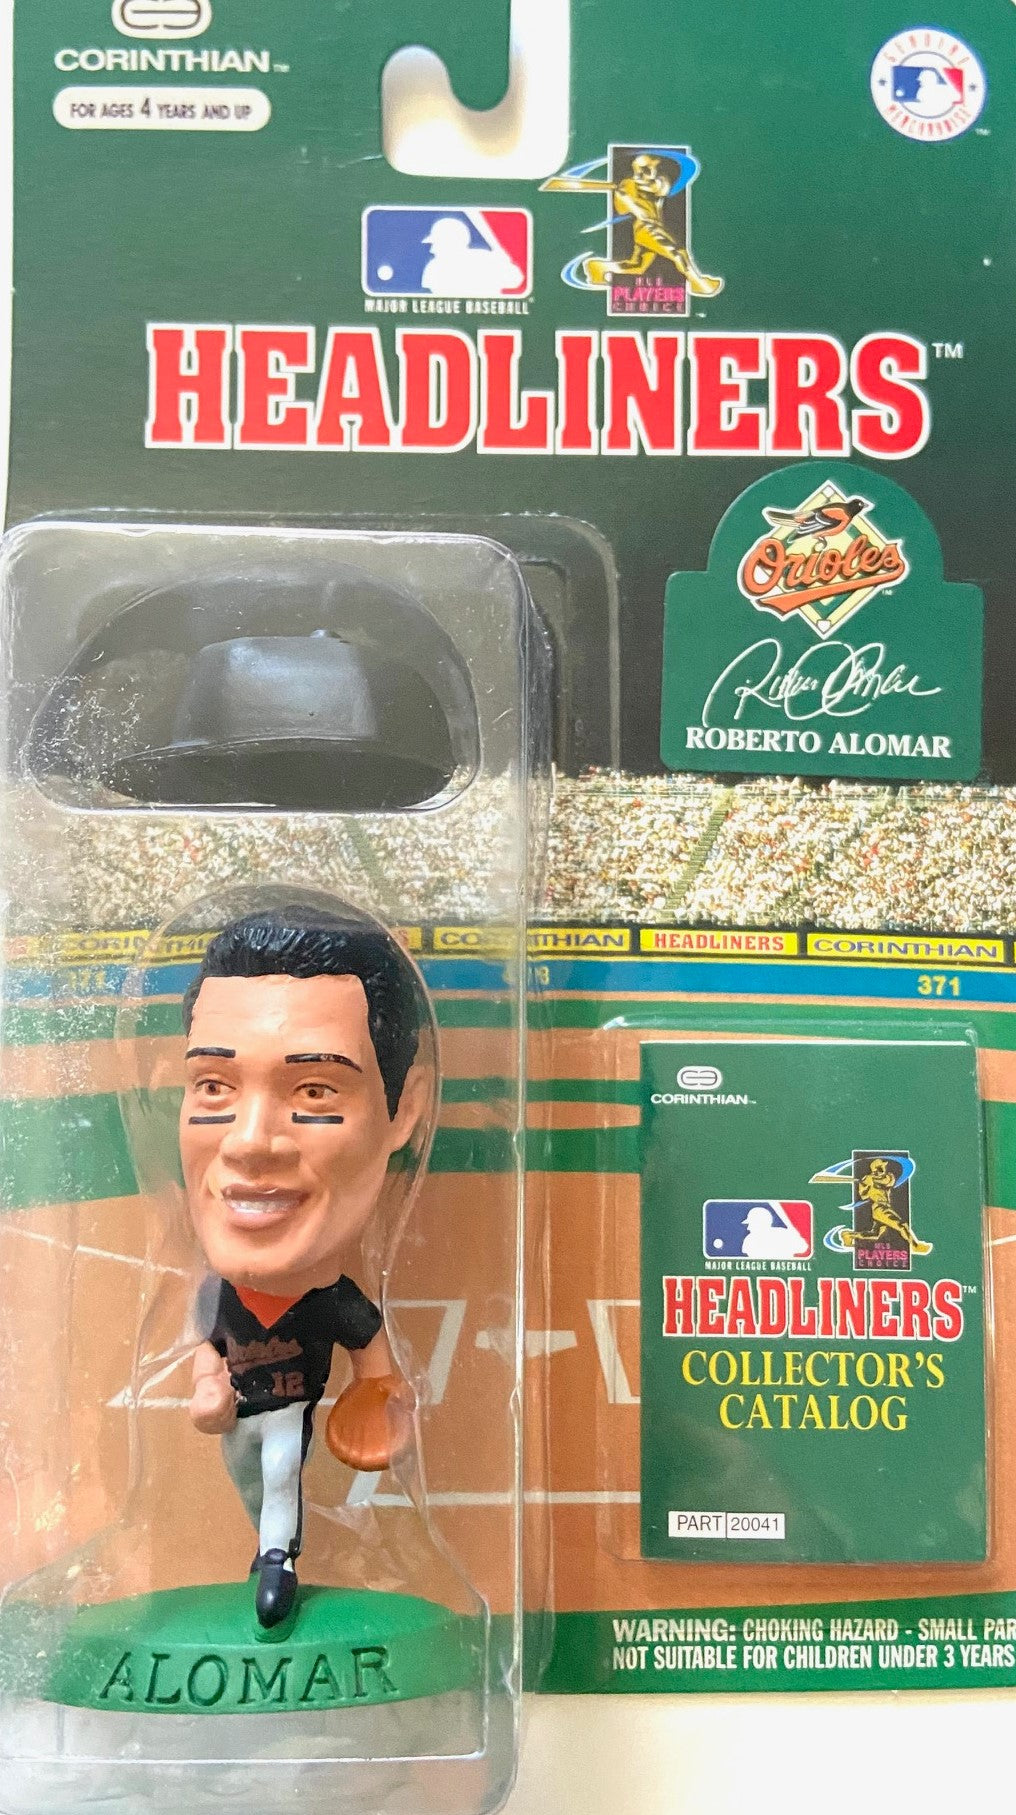 Roberto Alomar 1996 MLB Baltimore Orioles Headliner Figurine by Corinthian